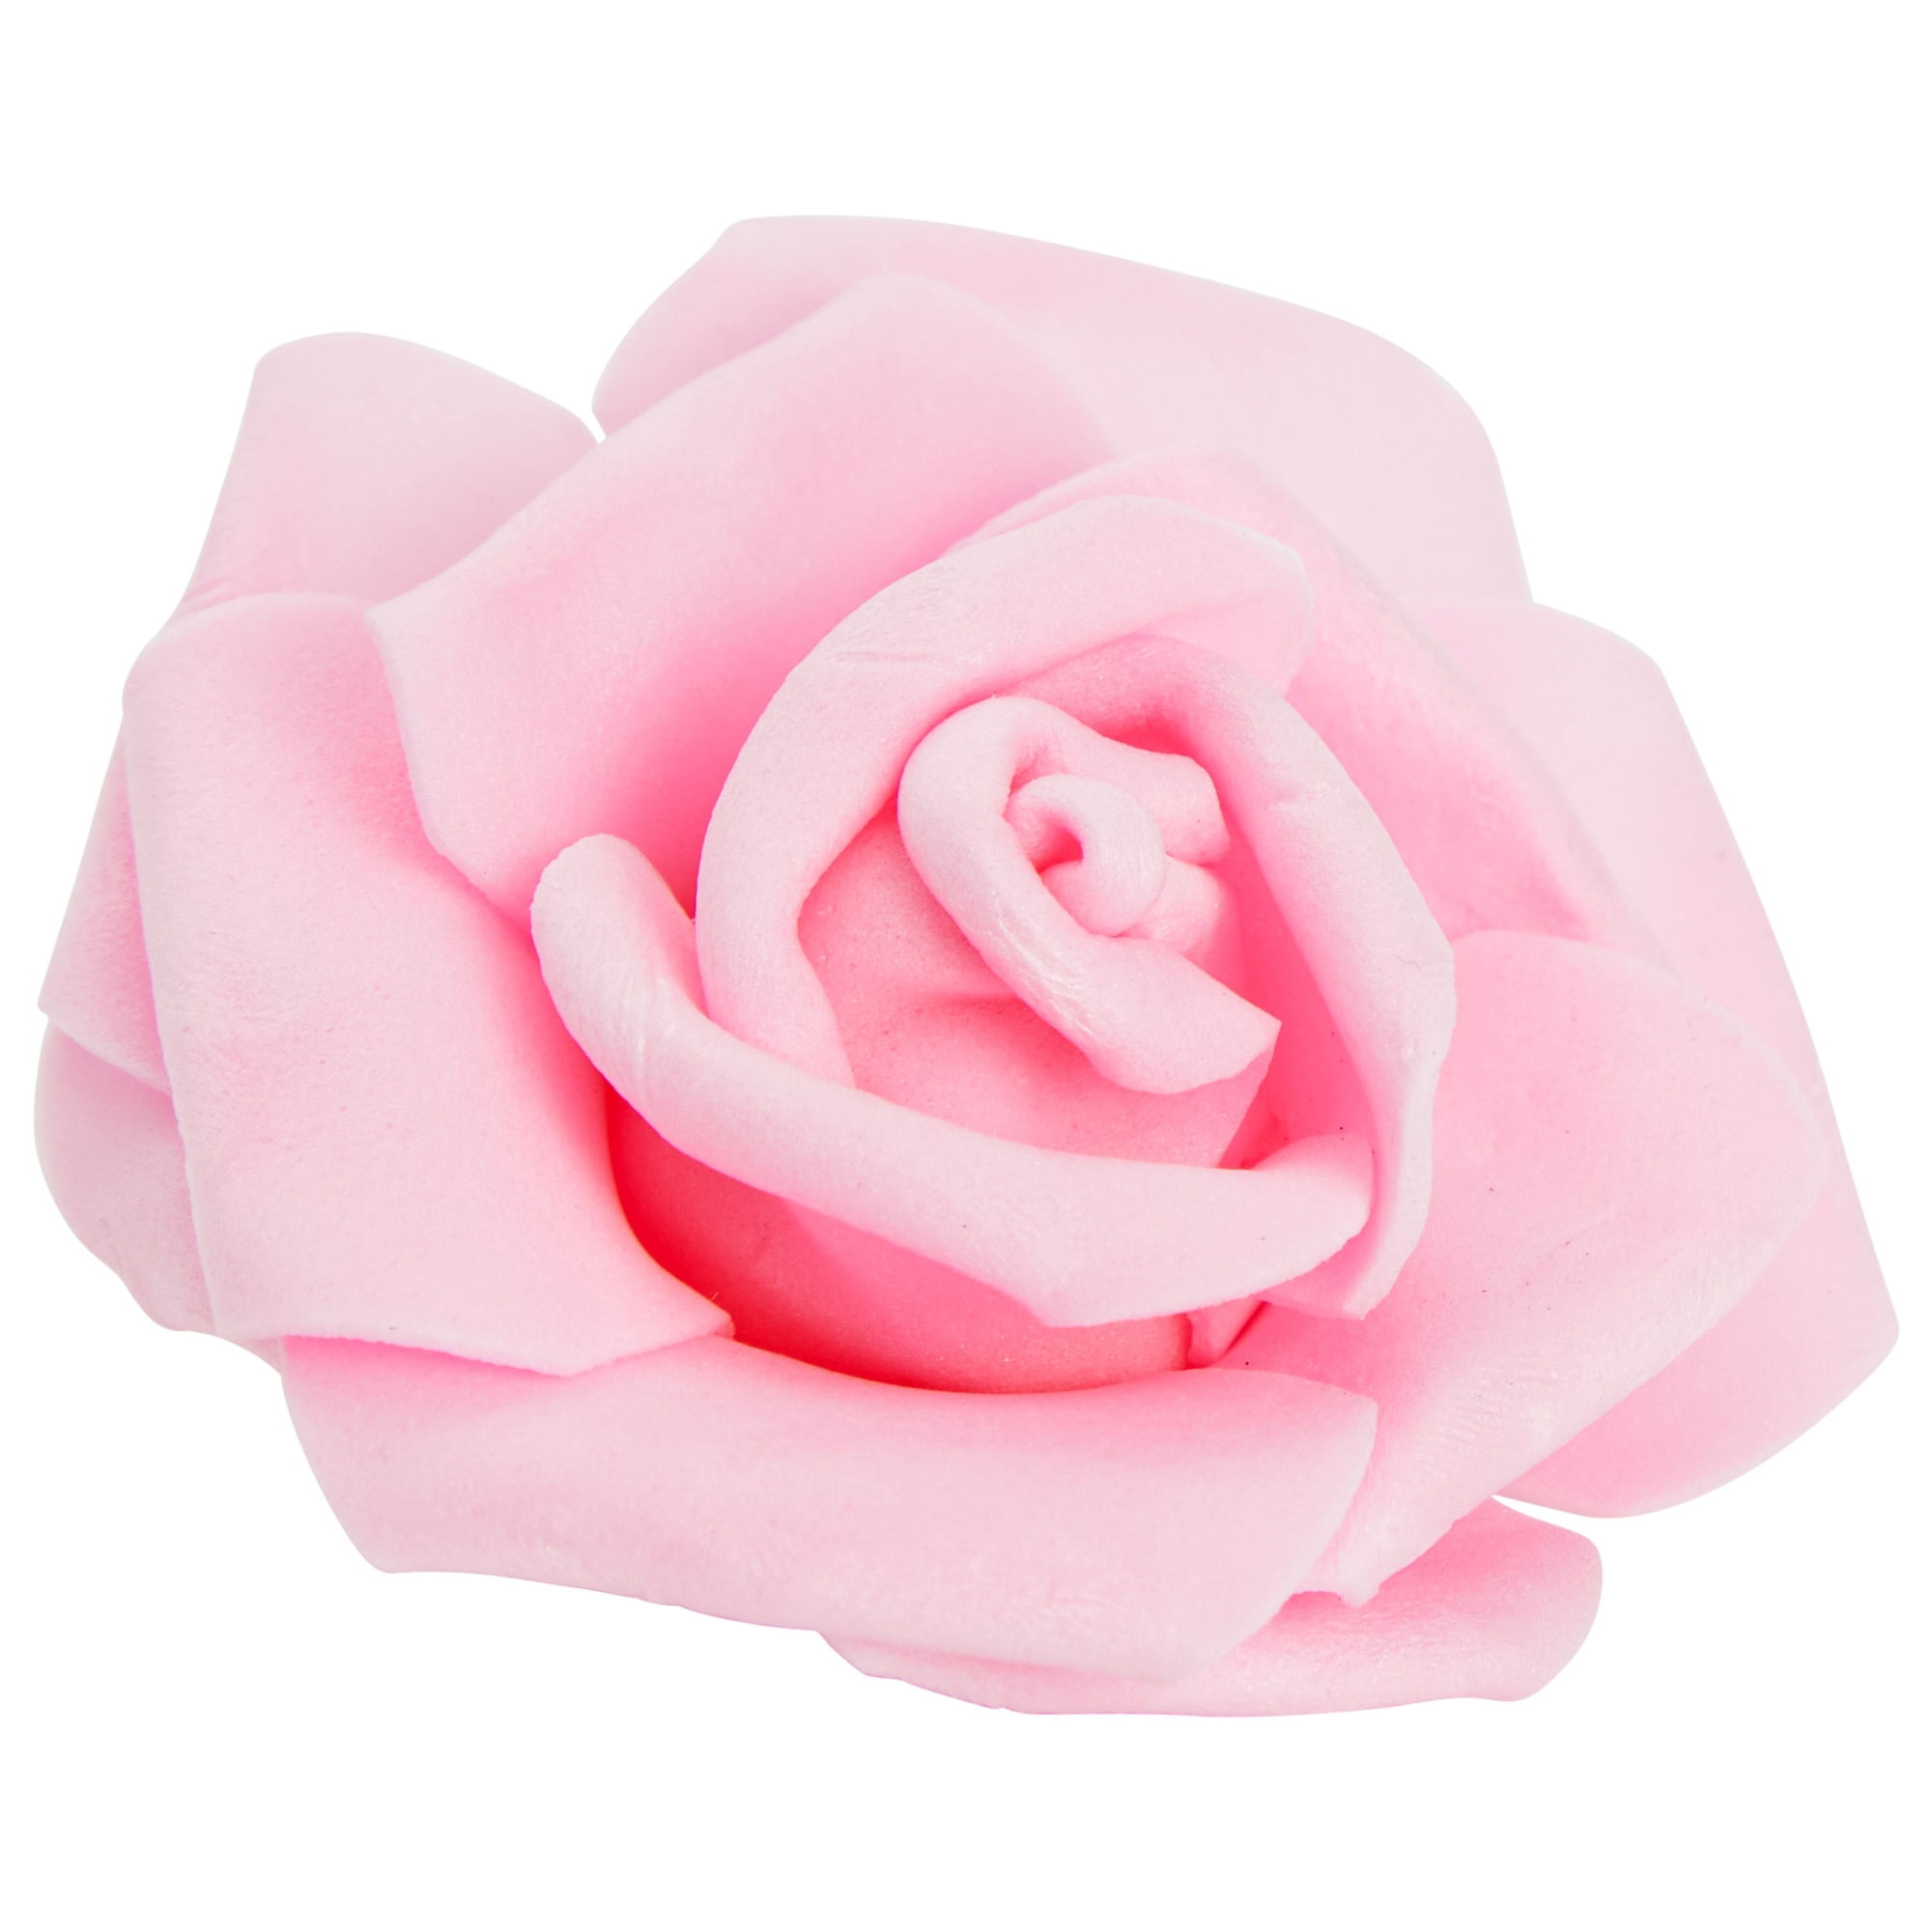 100pcs ~ Real Touch Foam Roses Wholesale Bulk RT-100 – Bouquets by Nicole